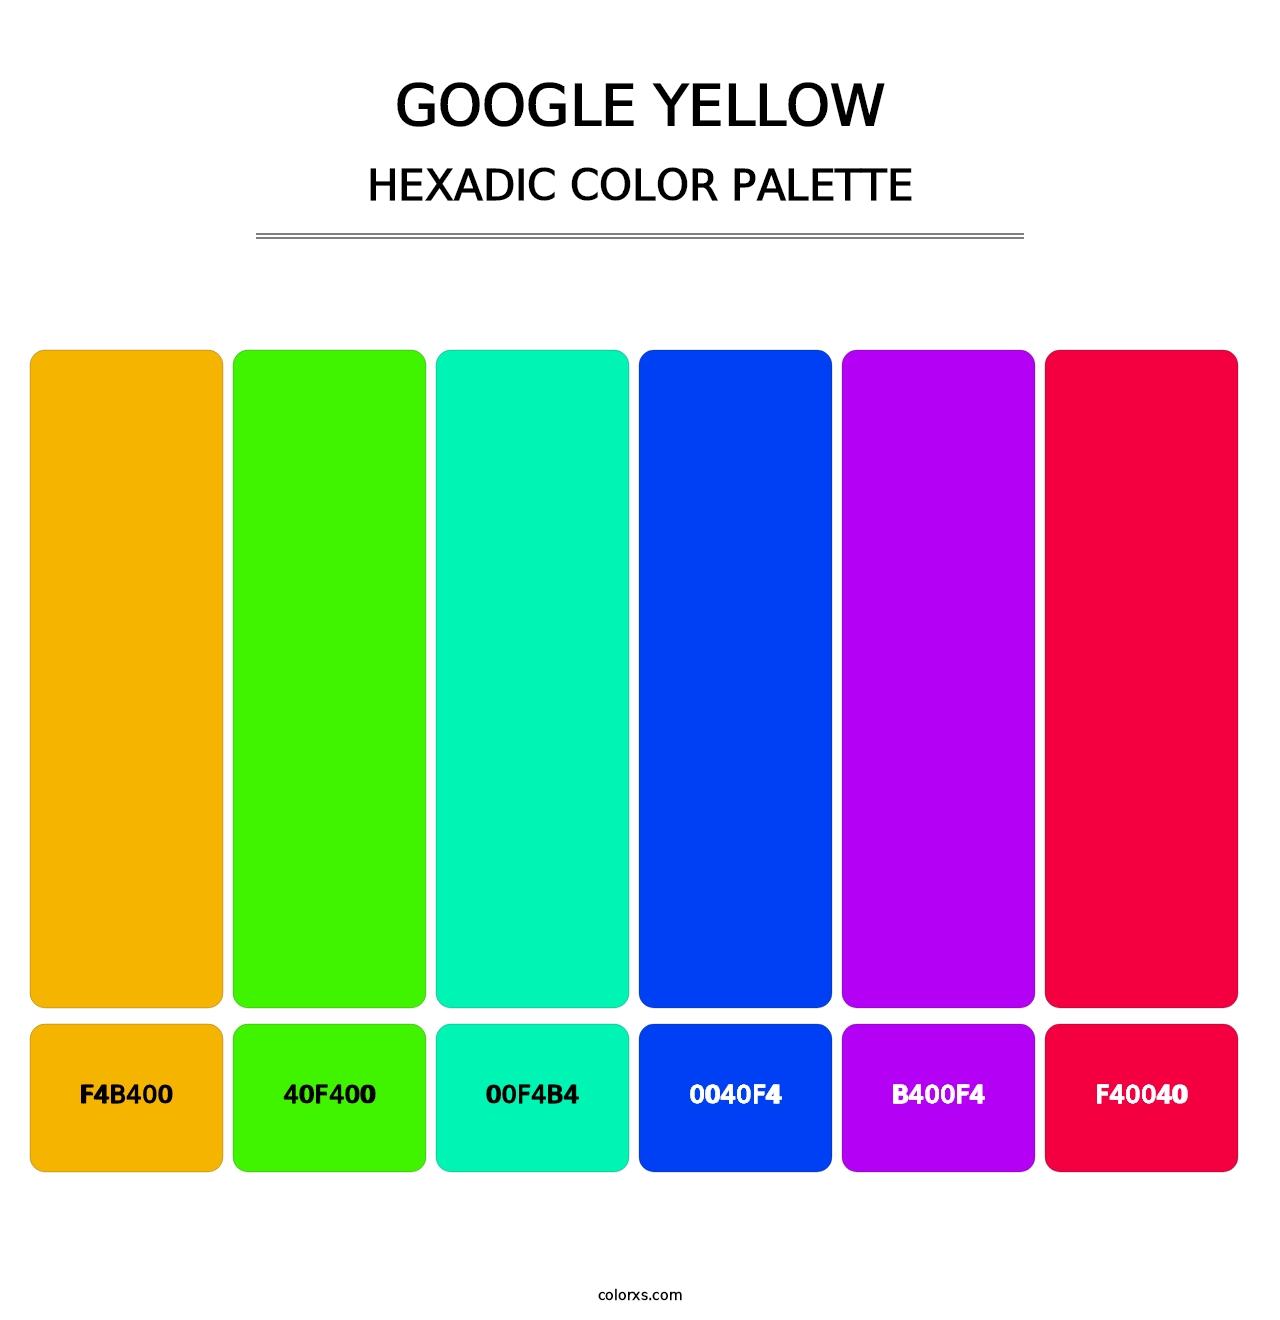 Google Yellow - Hexadic Color Palette